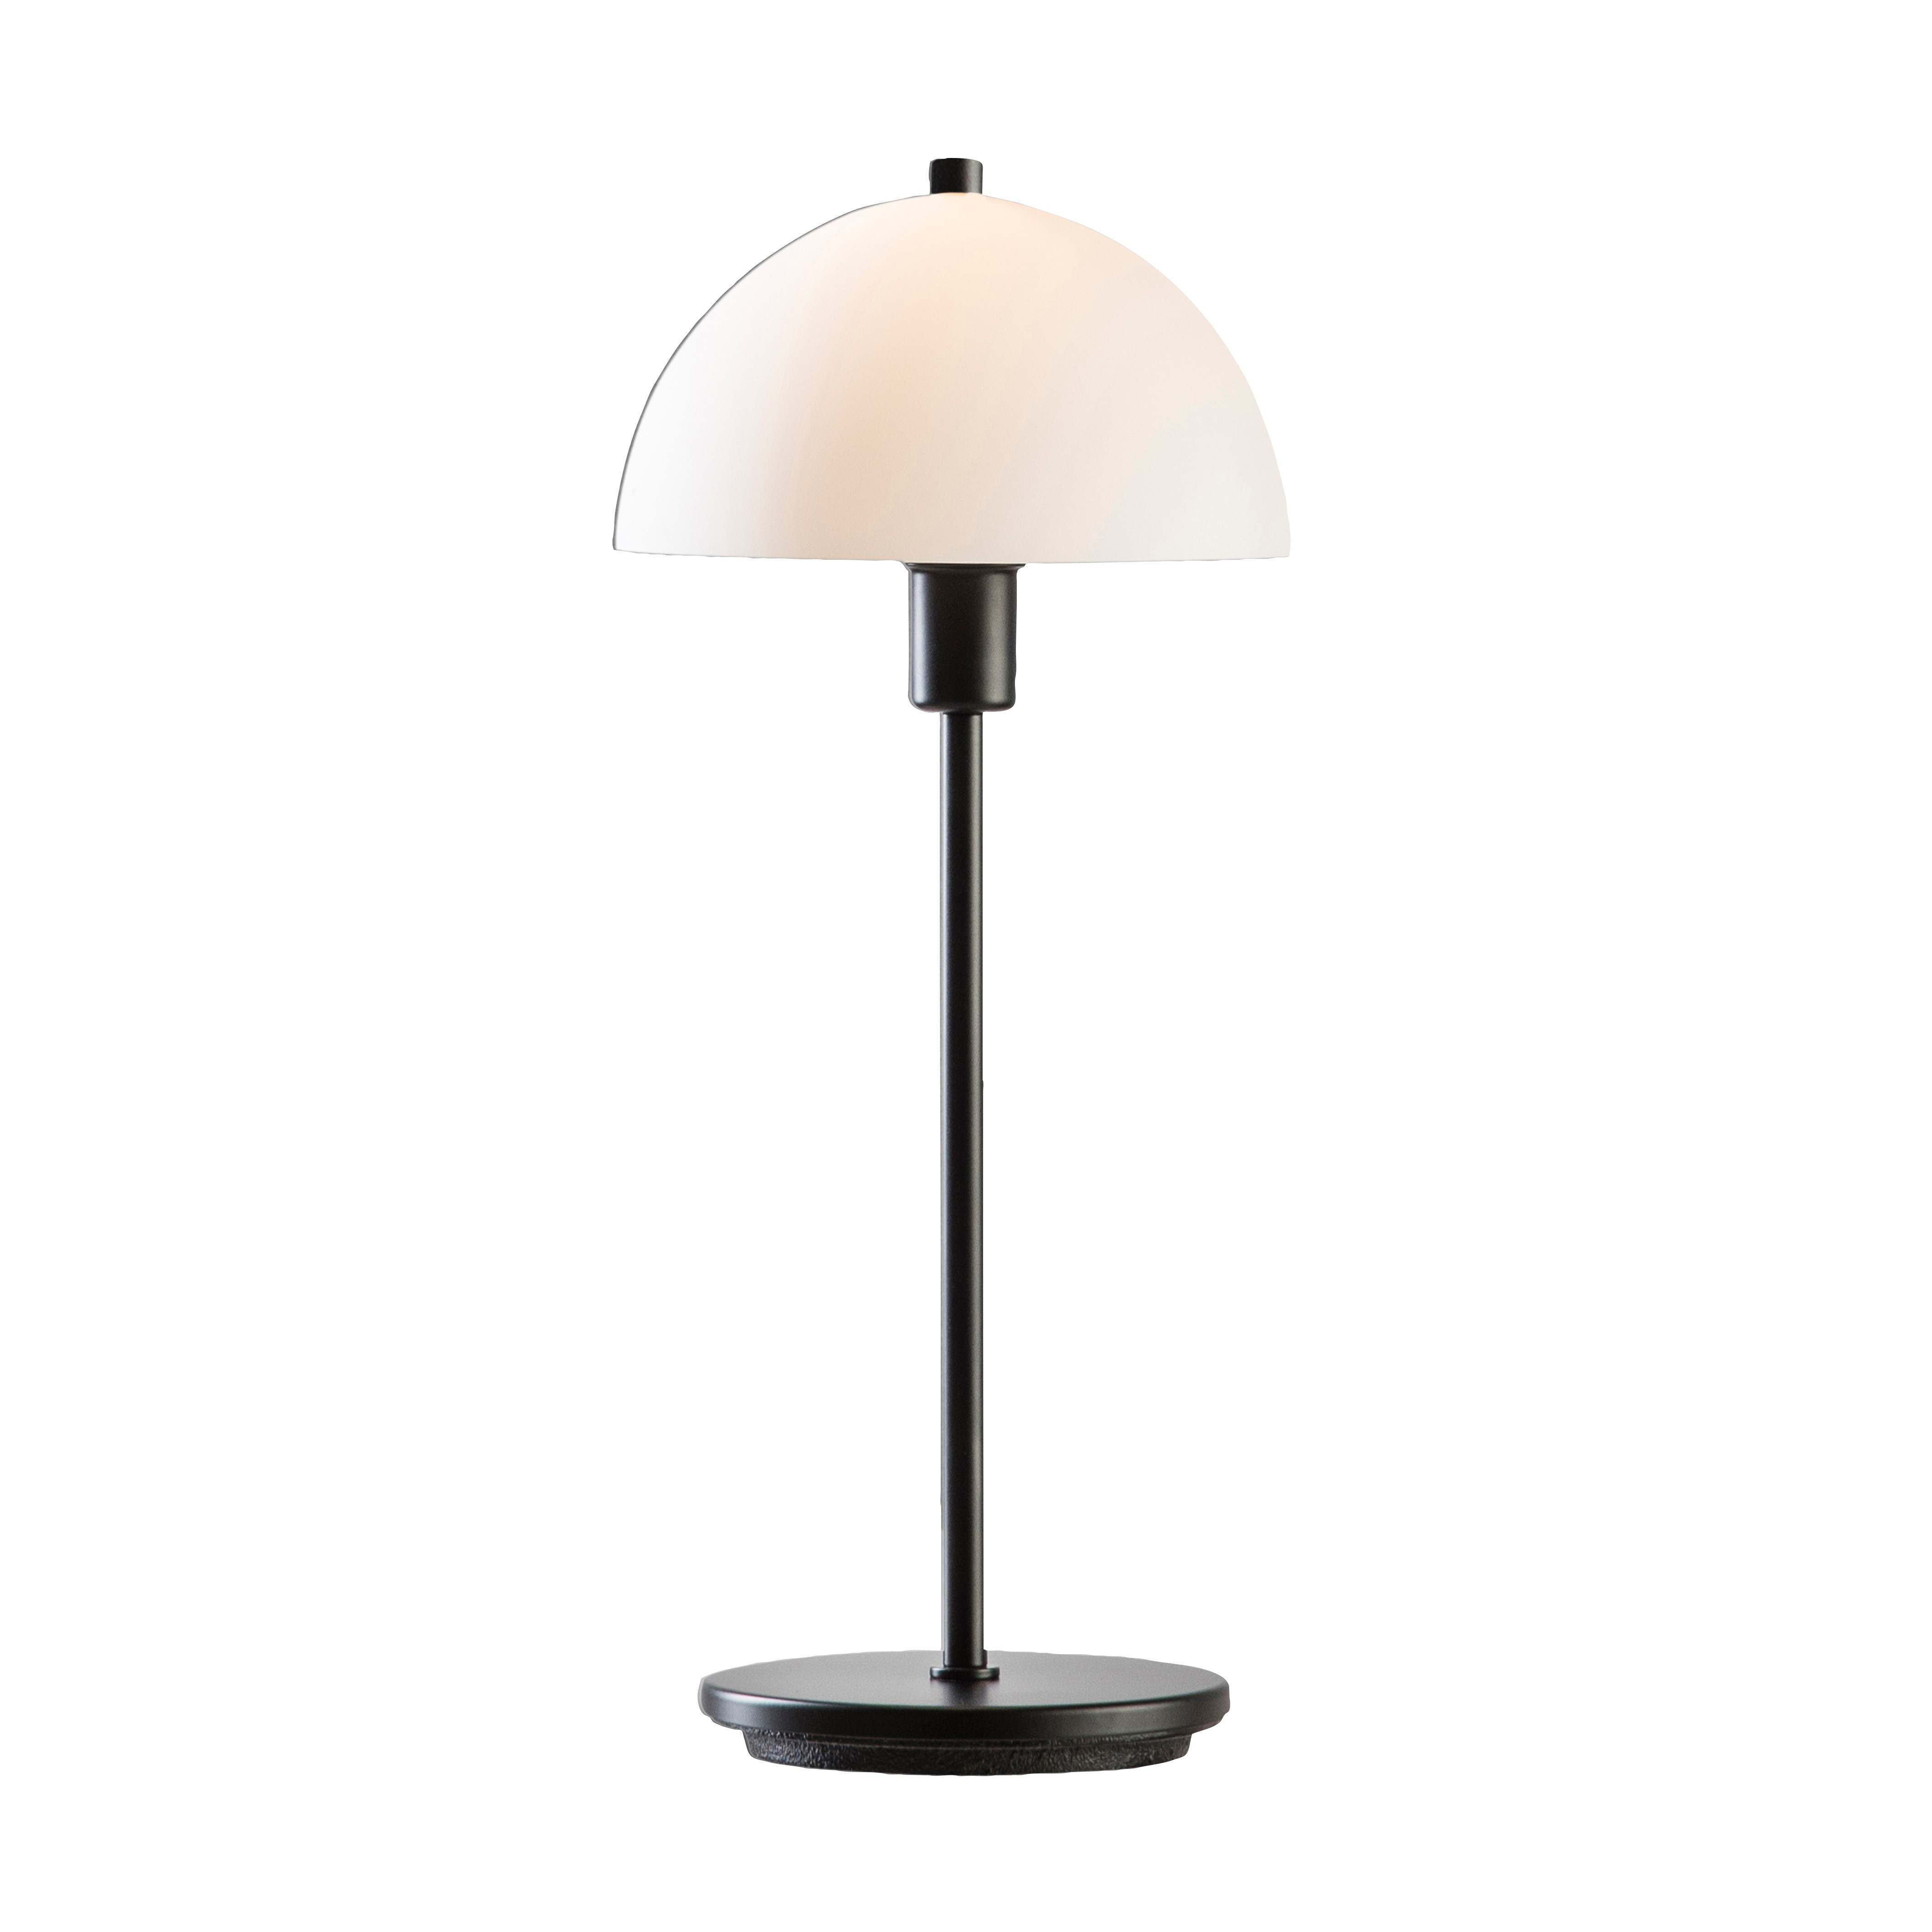 VIENDA X table lamp 48cm